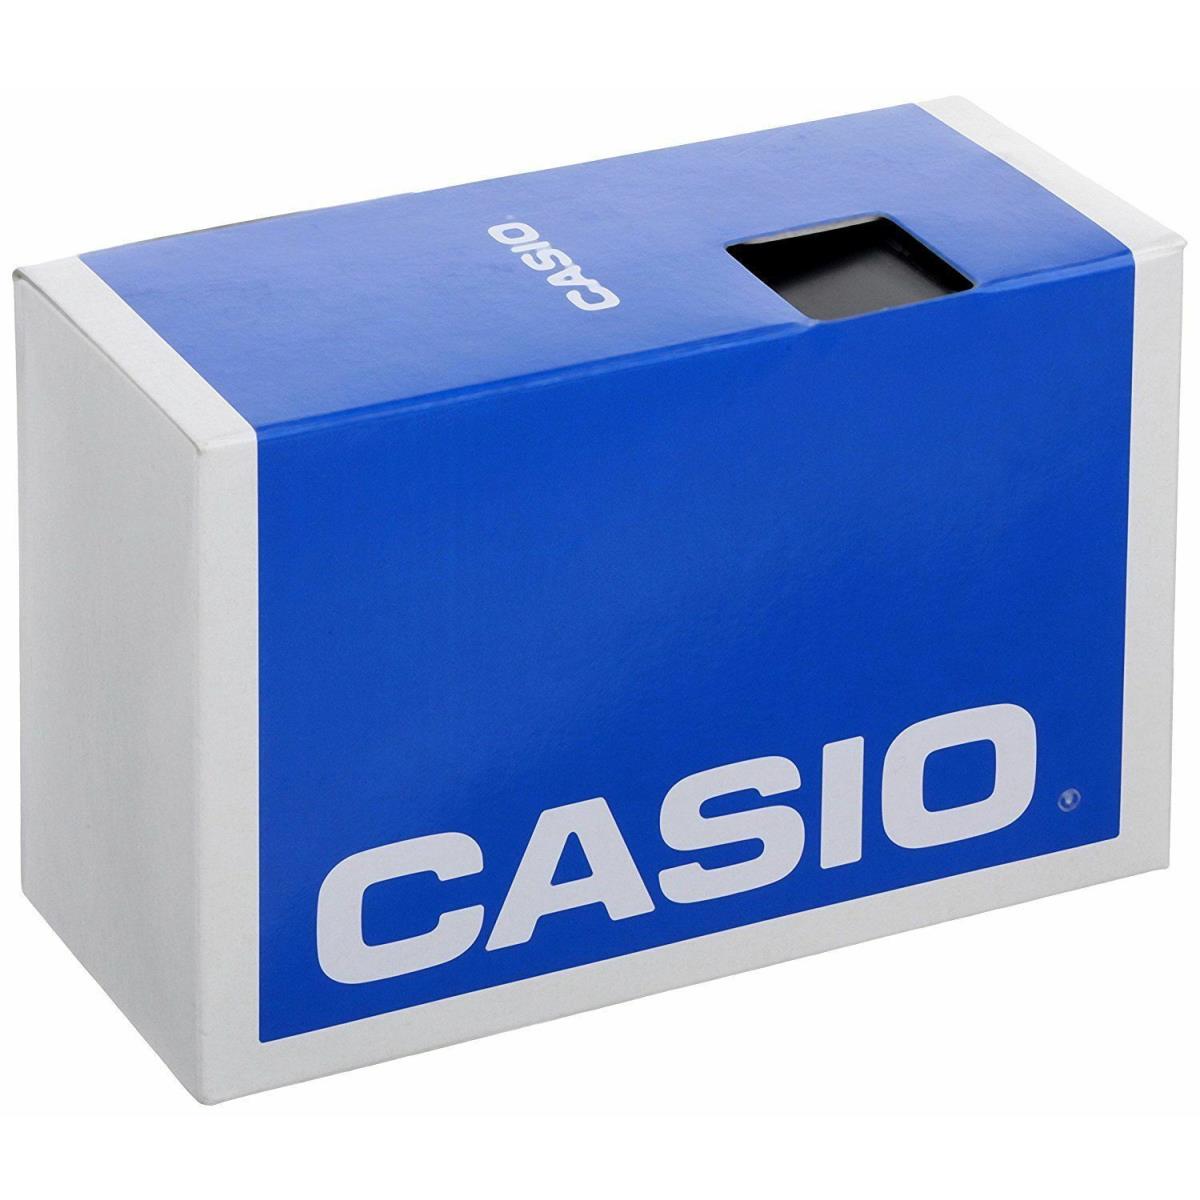 Casio G-shock Men`s Quartz Illuminator Blue Resin 43mm Digital Watch DW9052-2V - Dial: , Band: Blue, Bezel: Blue